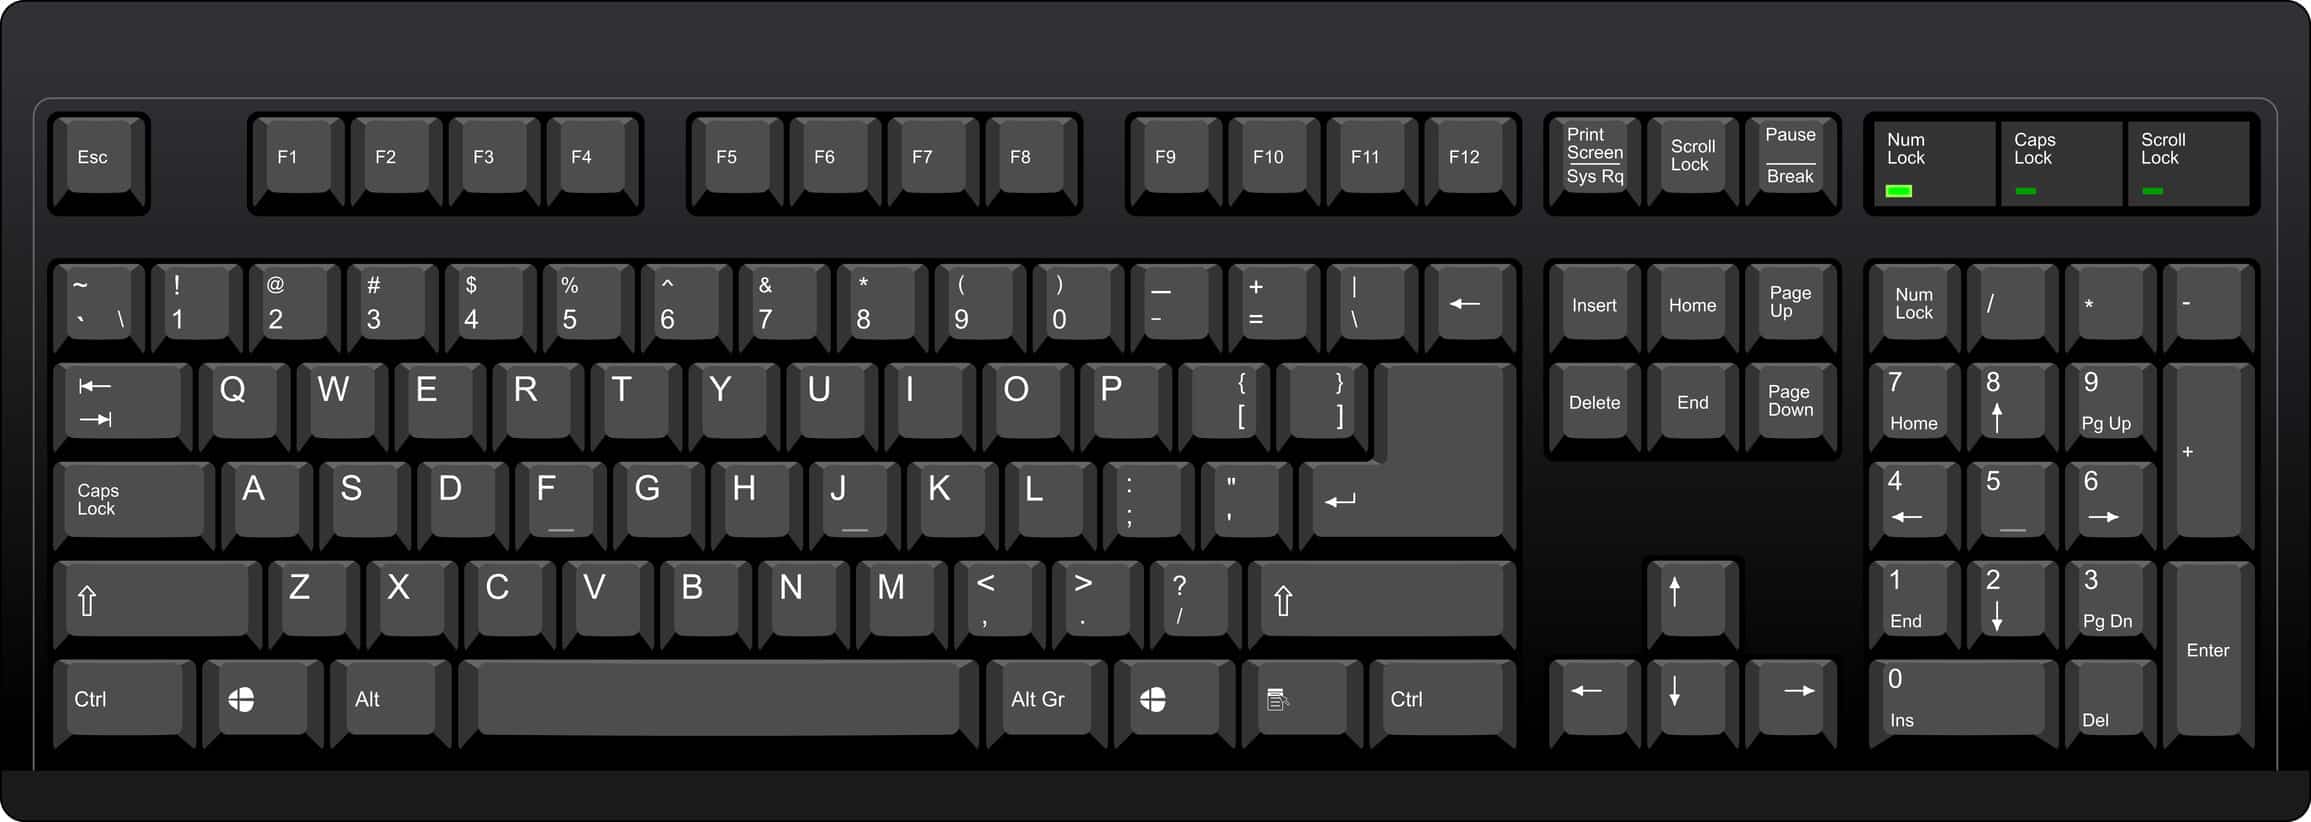 blank qwerty keyboard layout